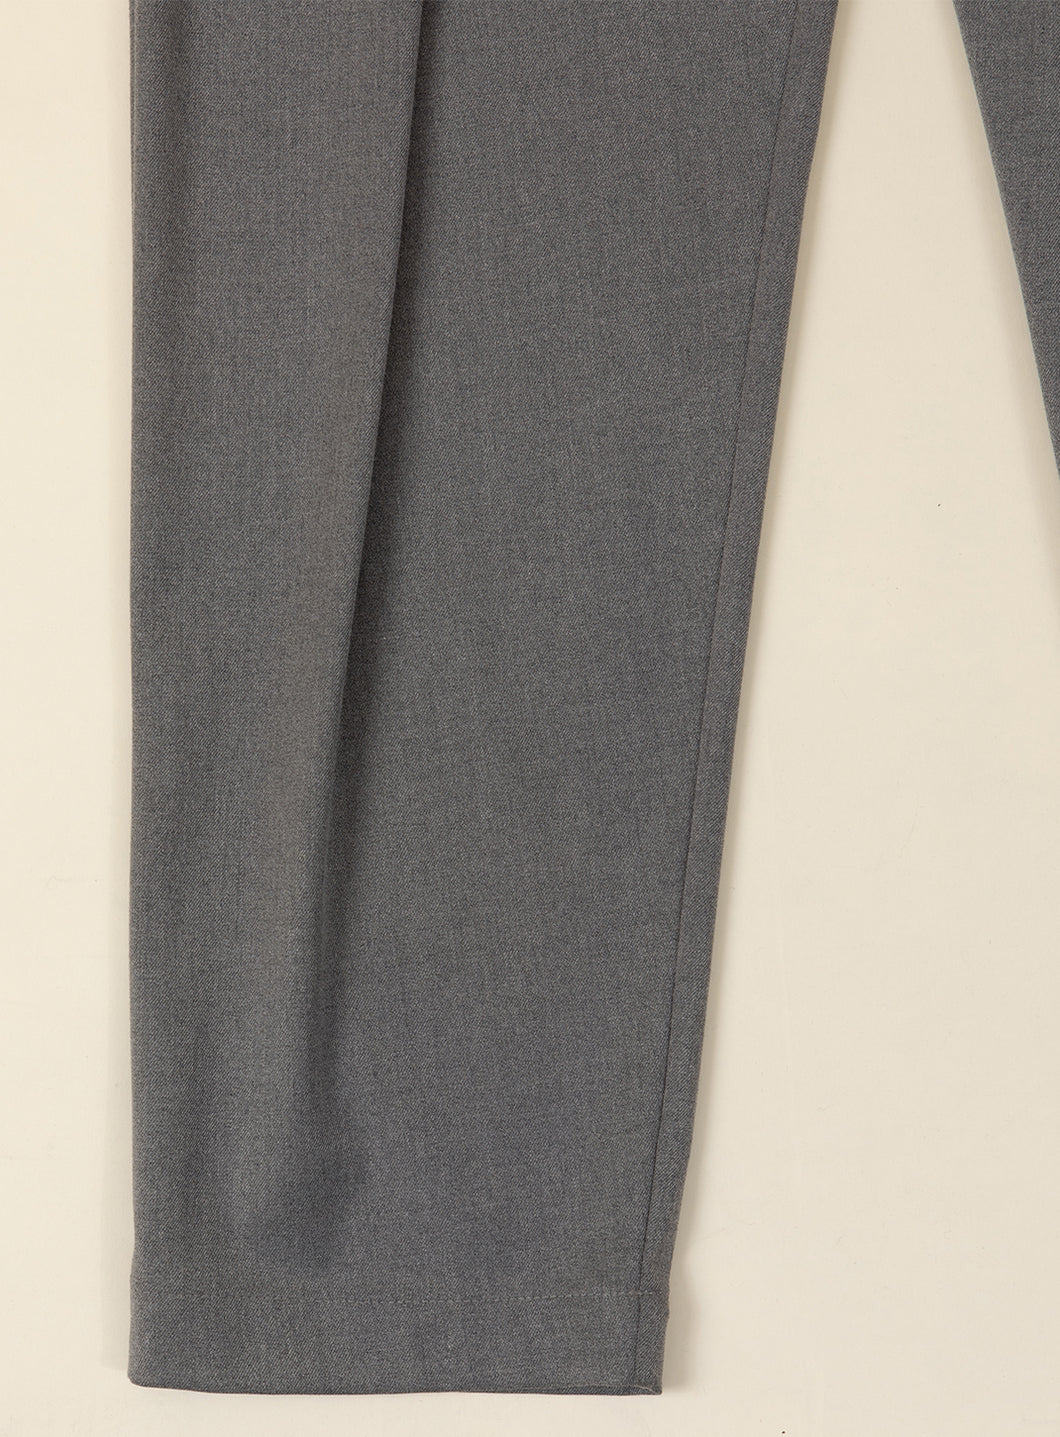 Elastic Waist Pants with Deep Pleats in Heather Grey Serge Fabric